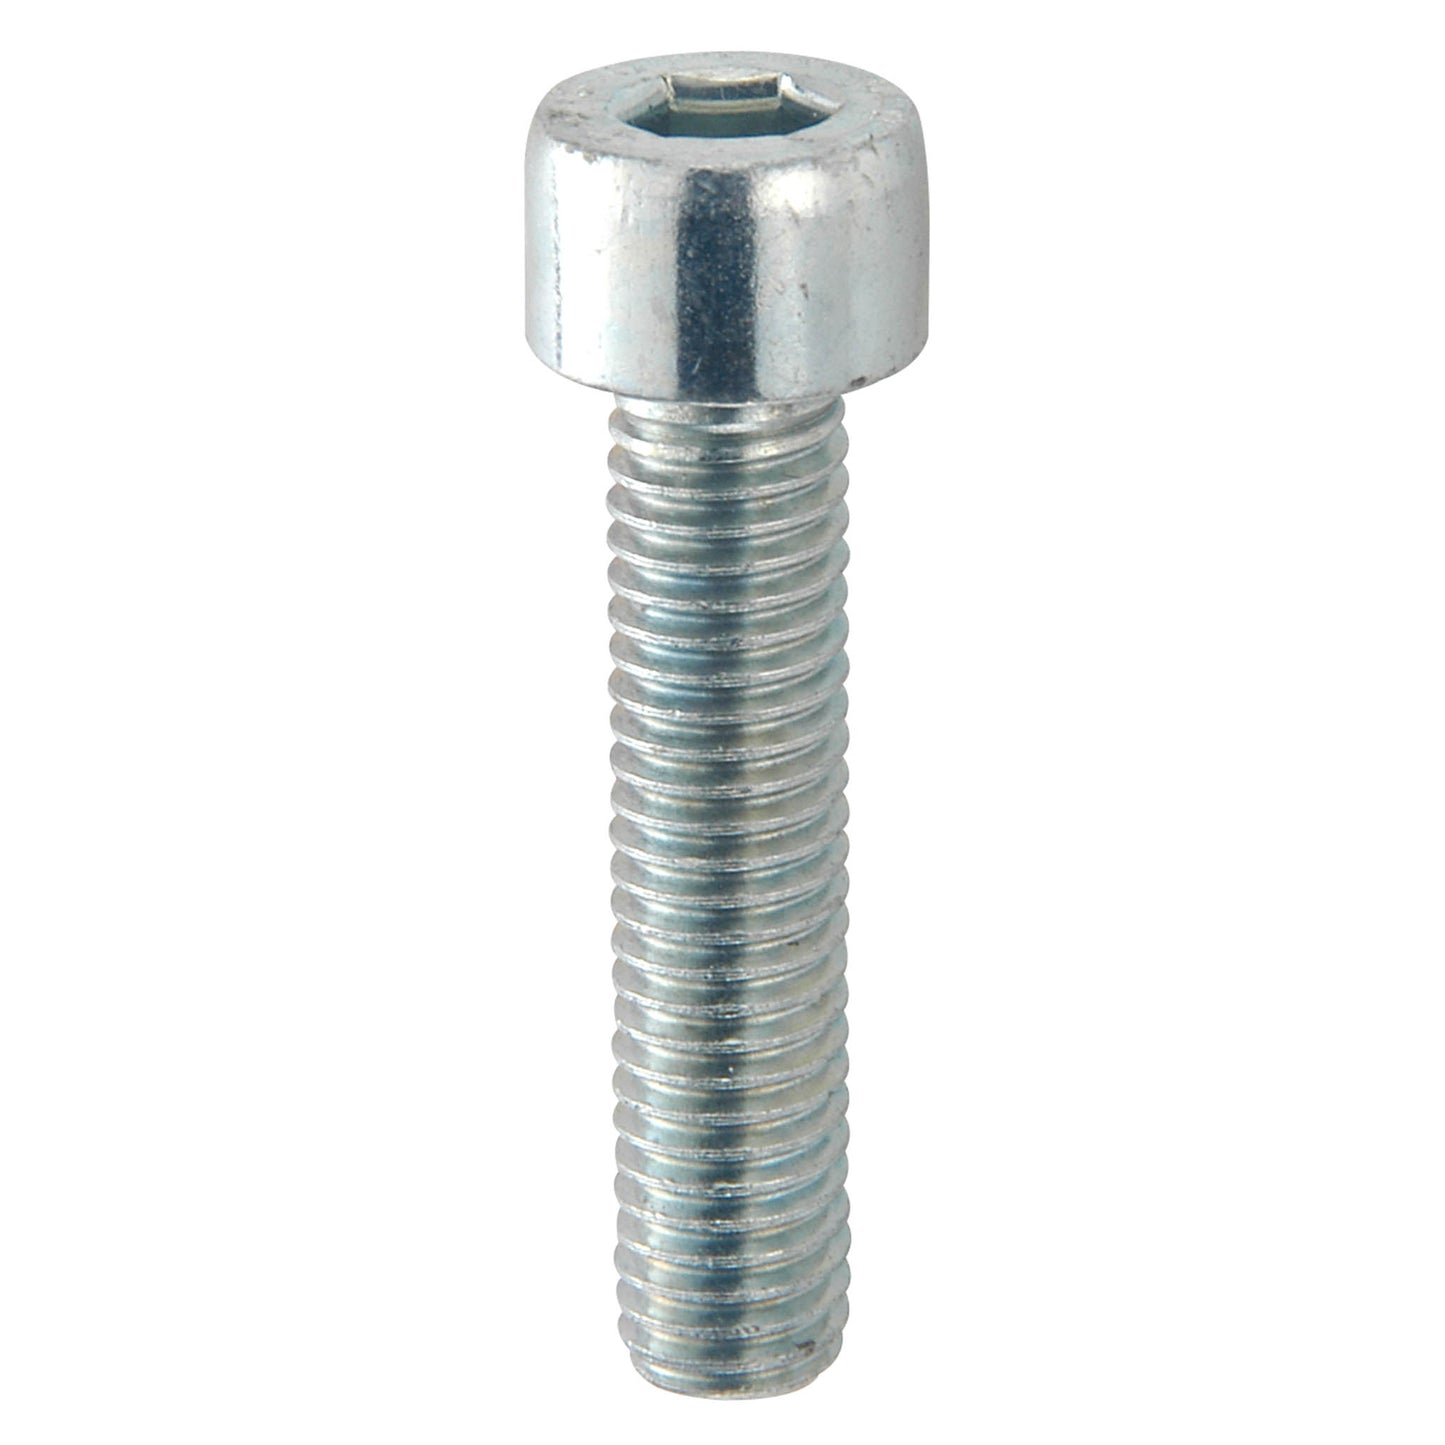 Hexagon socket clamping bolt M 8 x 50 mm, galvanized steel